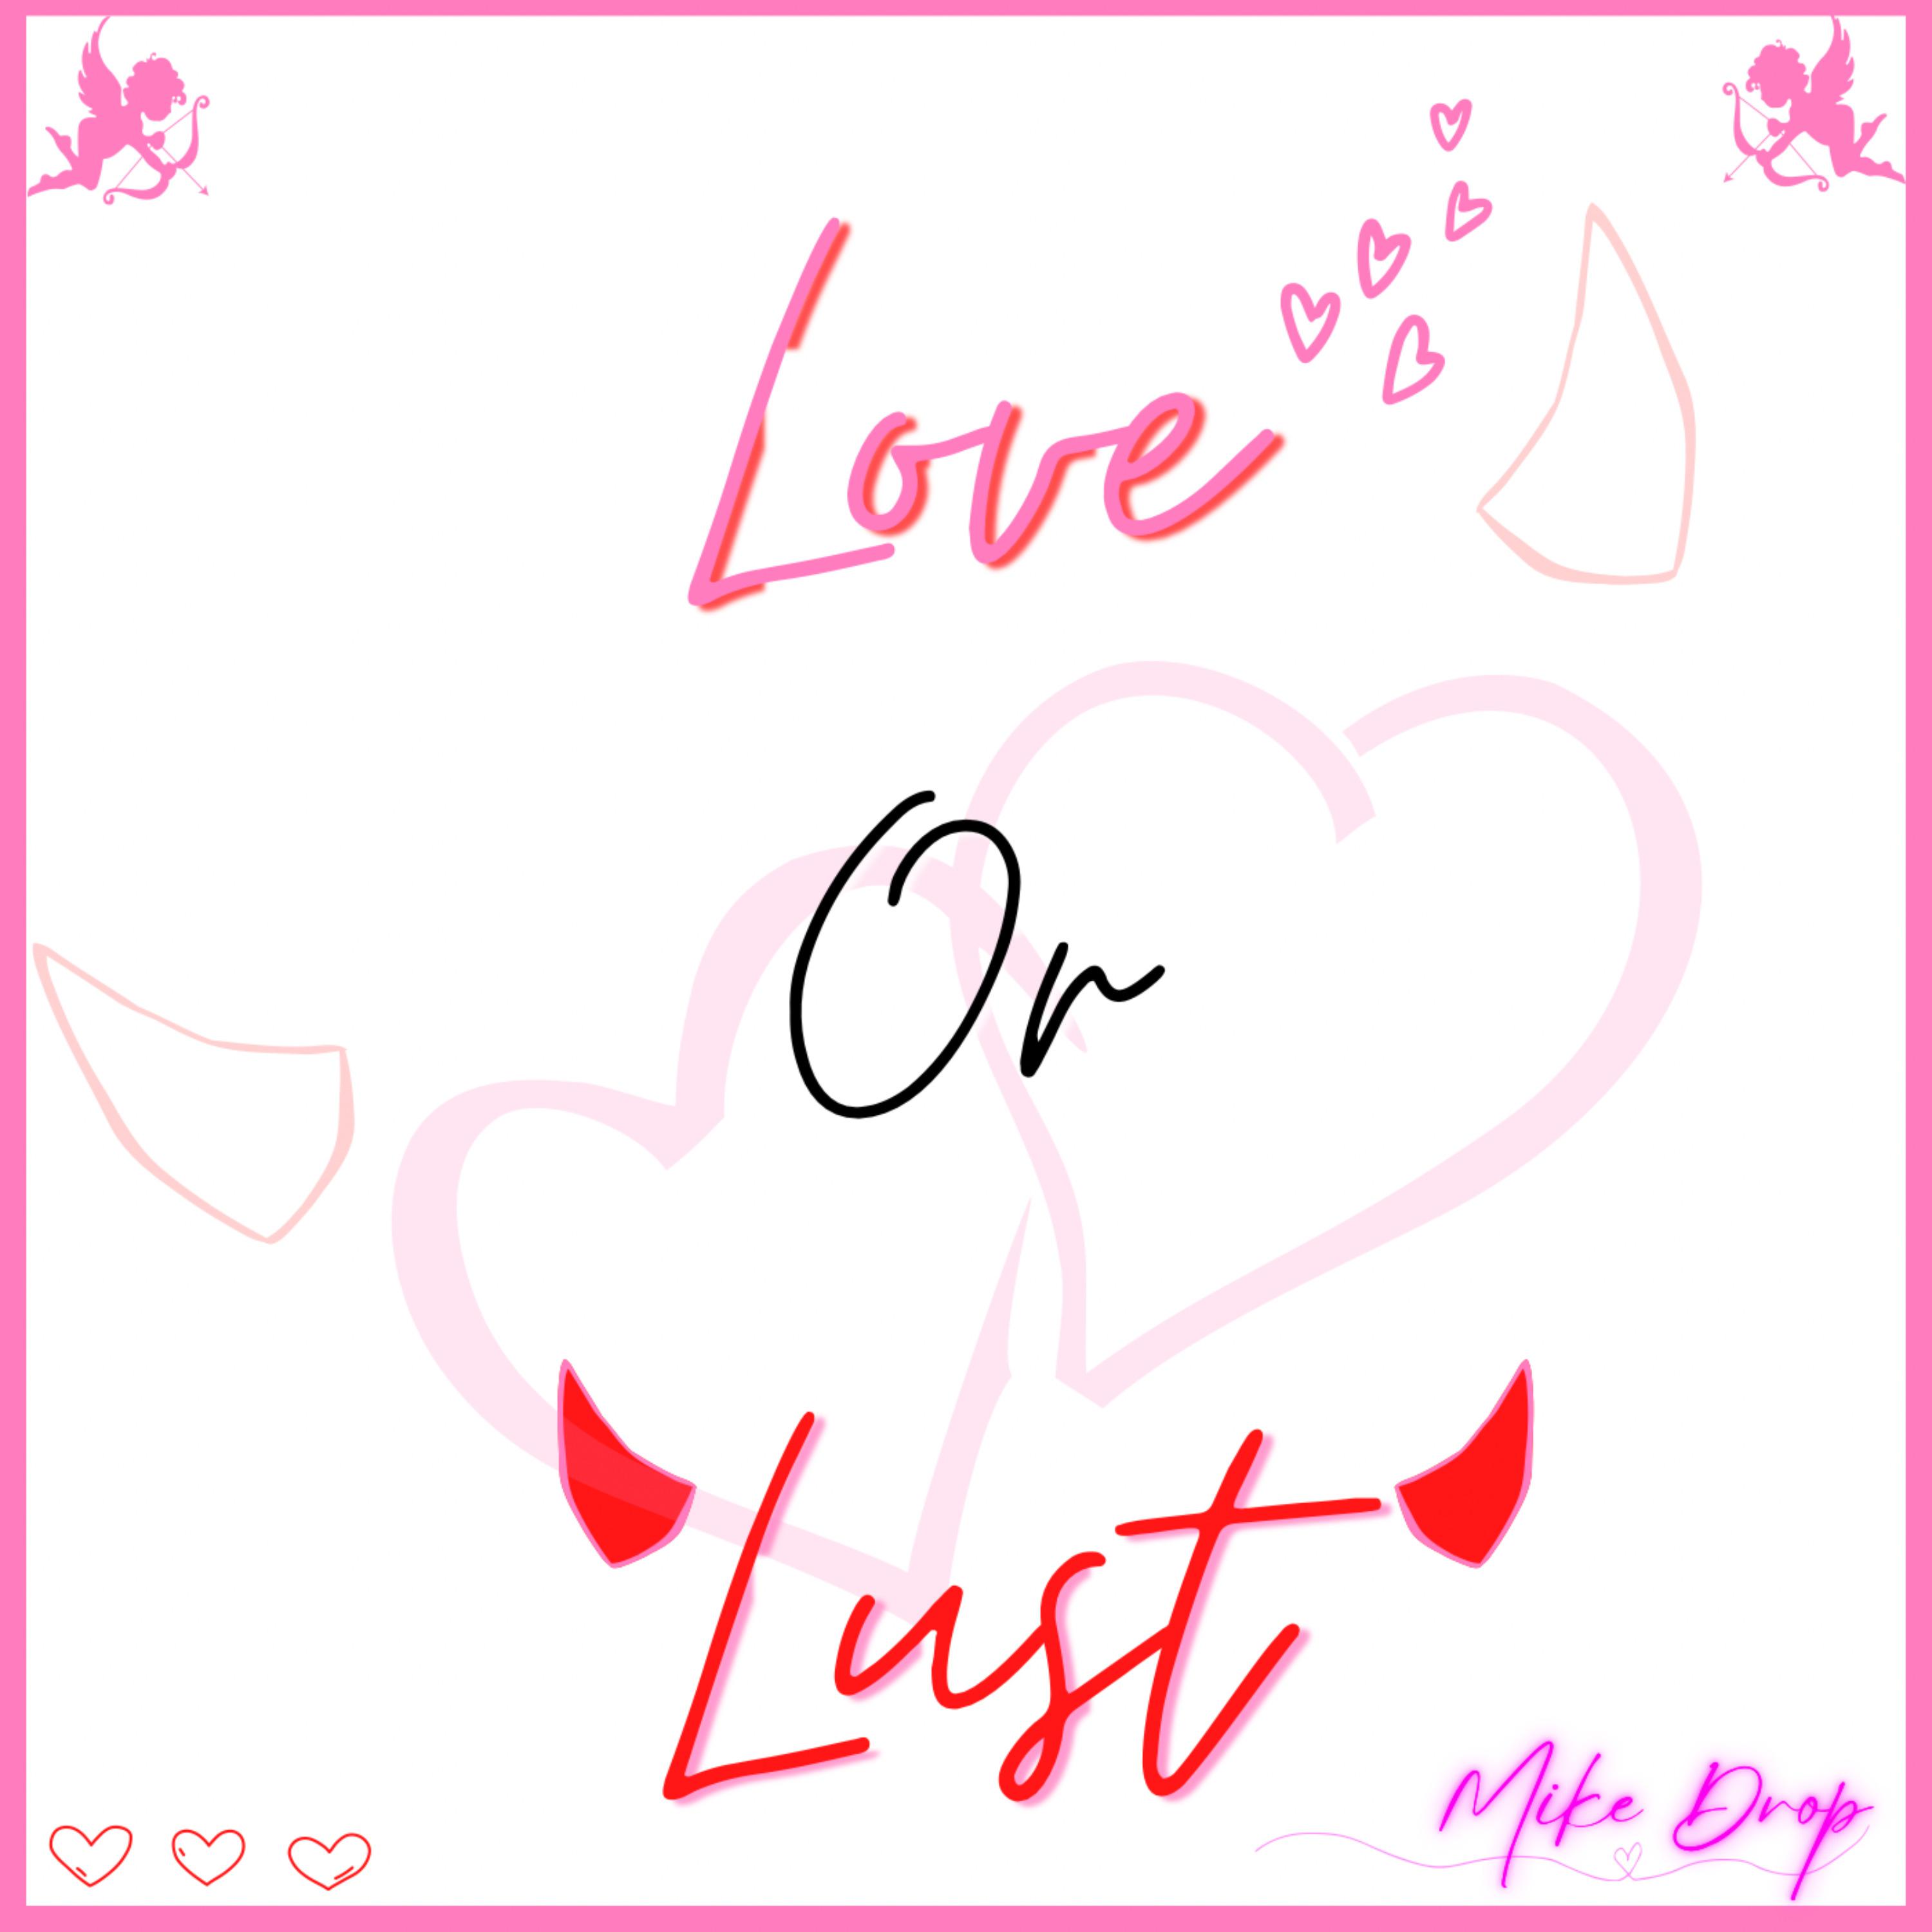 Mike Drop - Love Or Lust